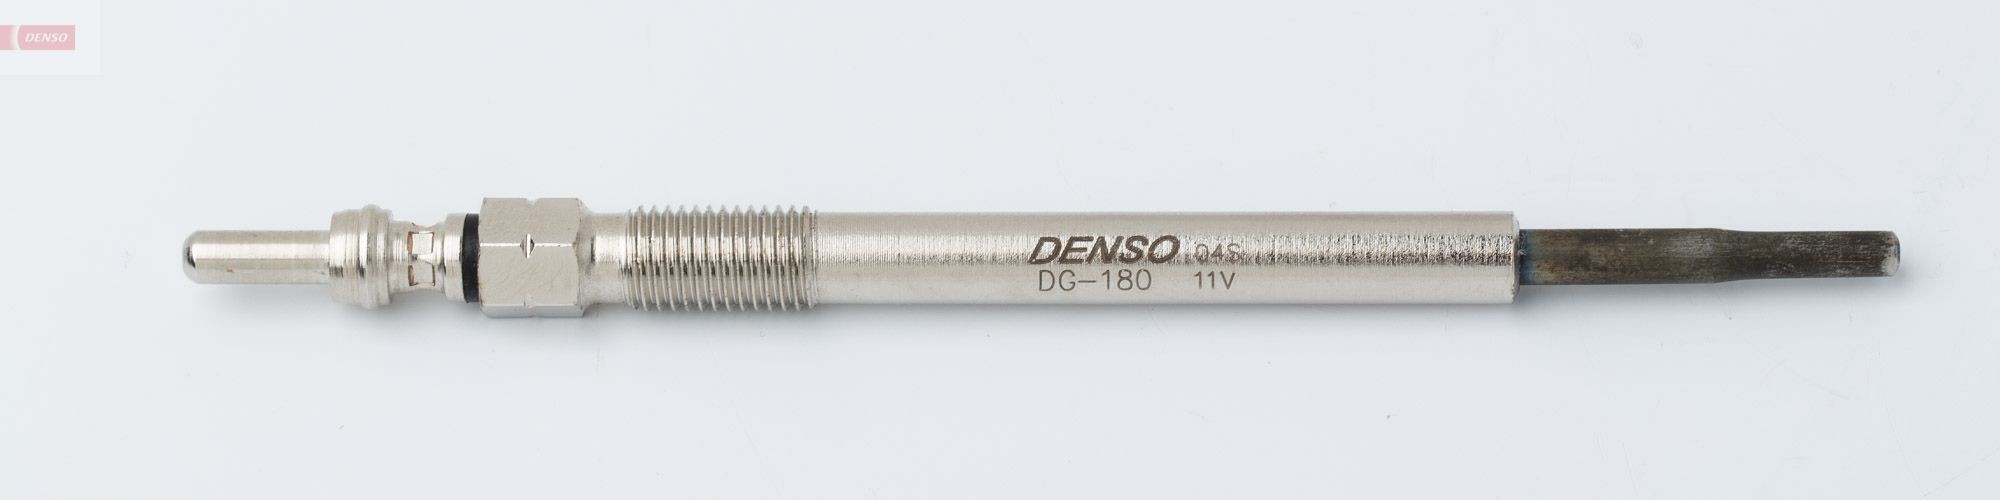 DENSO DG-180 Glow plug 59 607 9